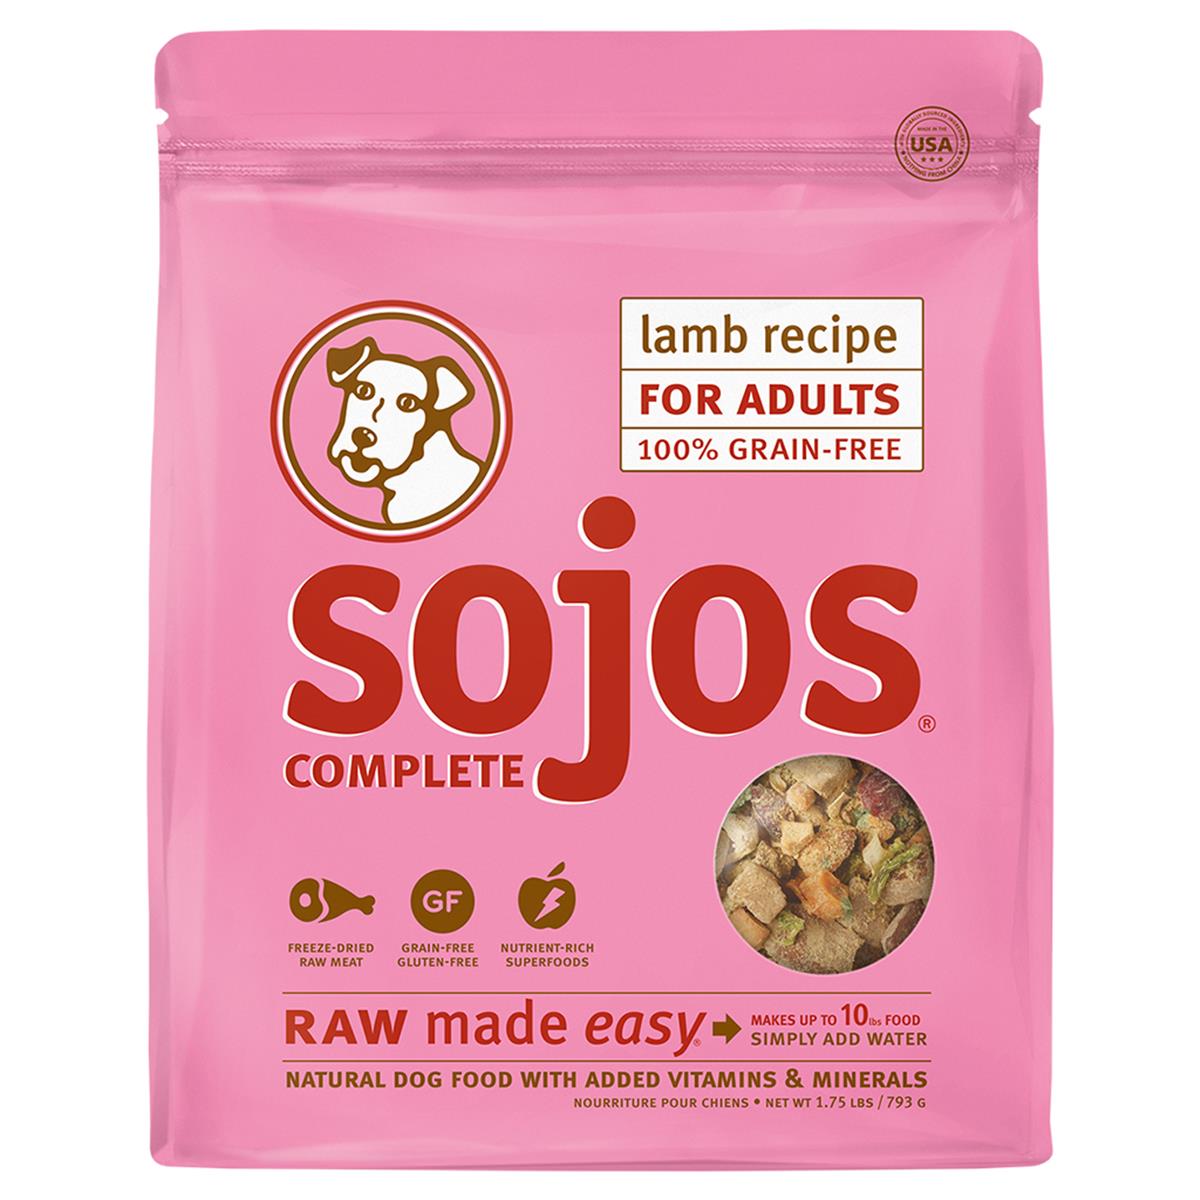 Sj30175 1.75 Lbs Complete Lamb Recipe Grain-free Dog Food